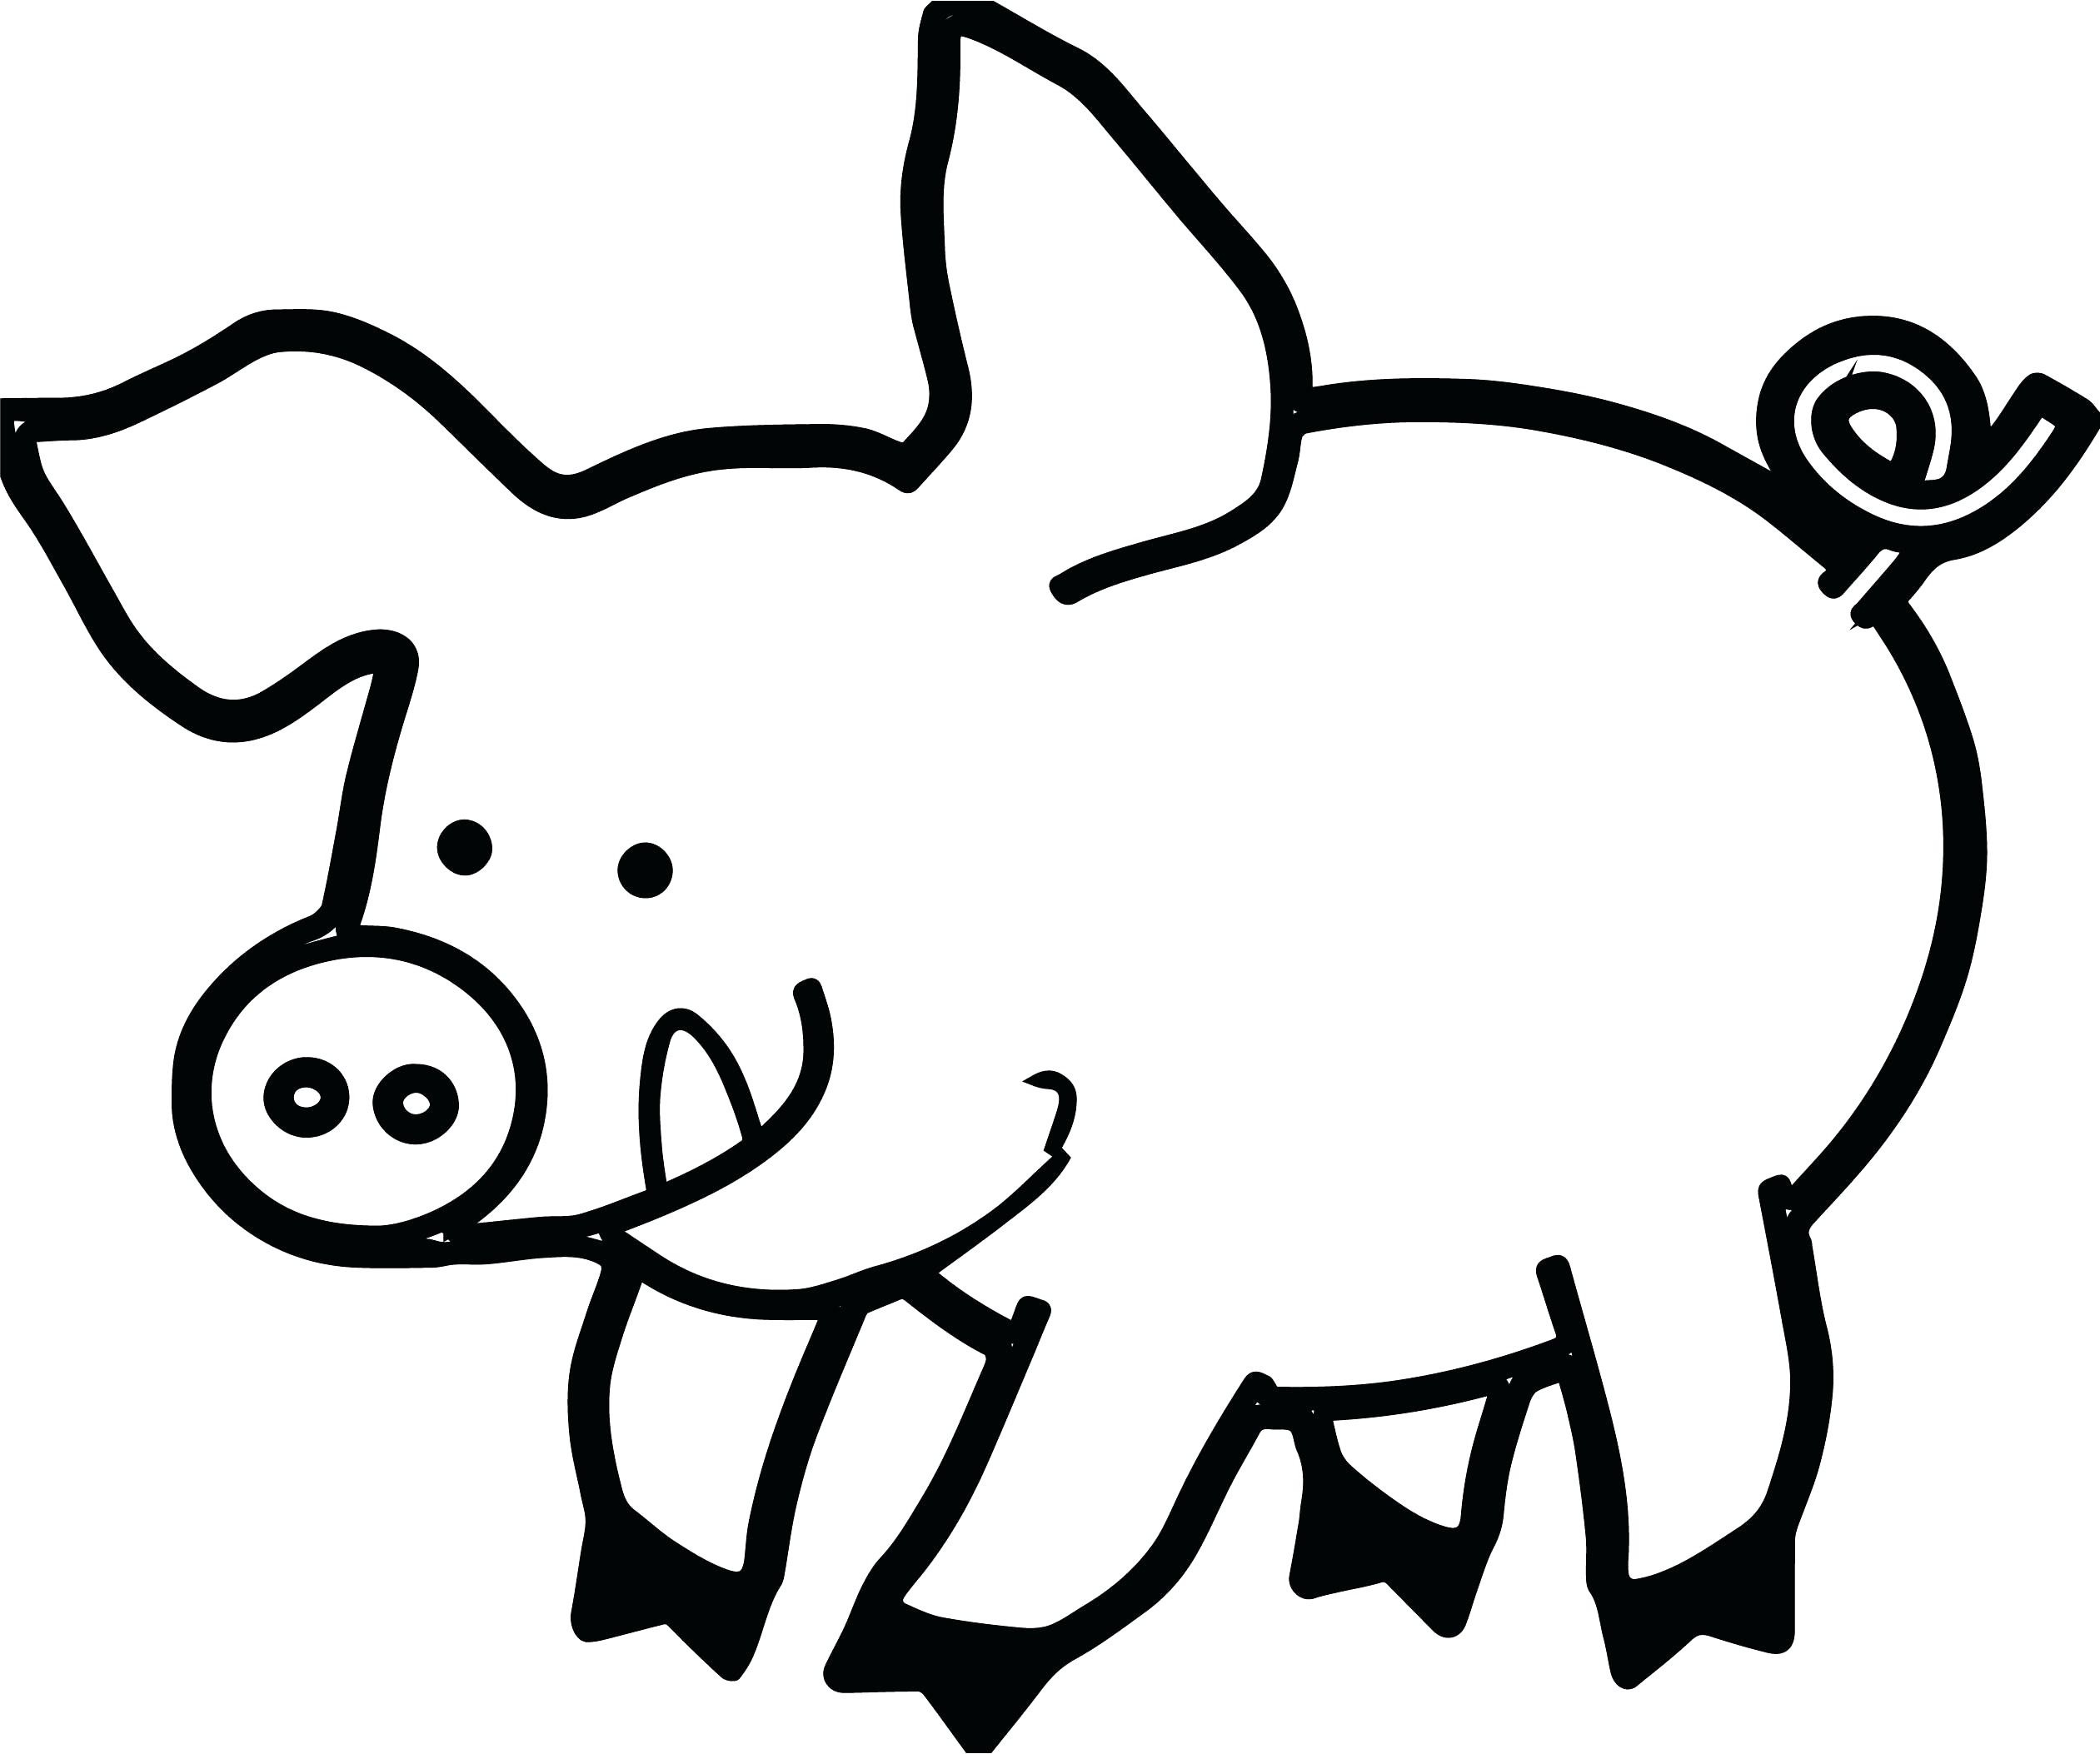 Pig face drawing.